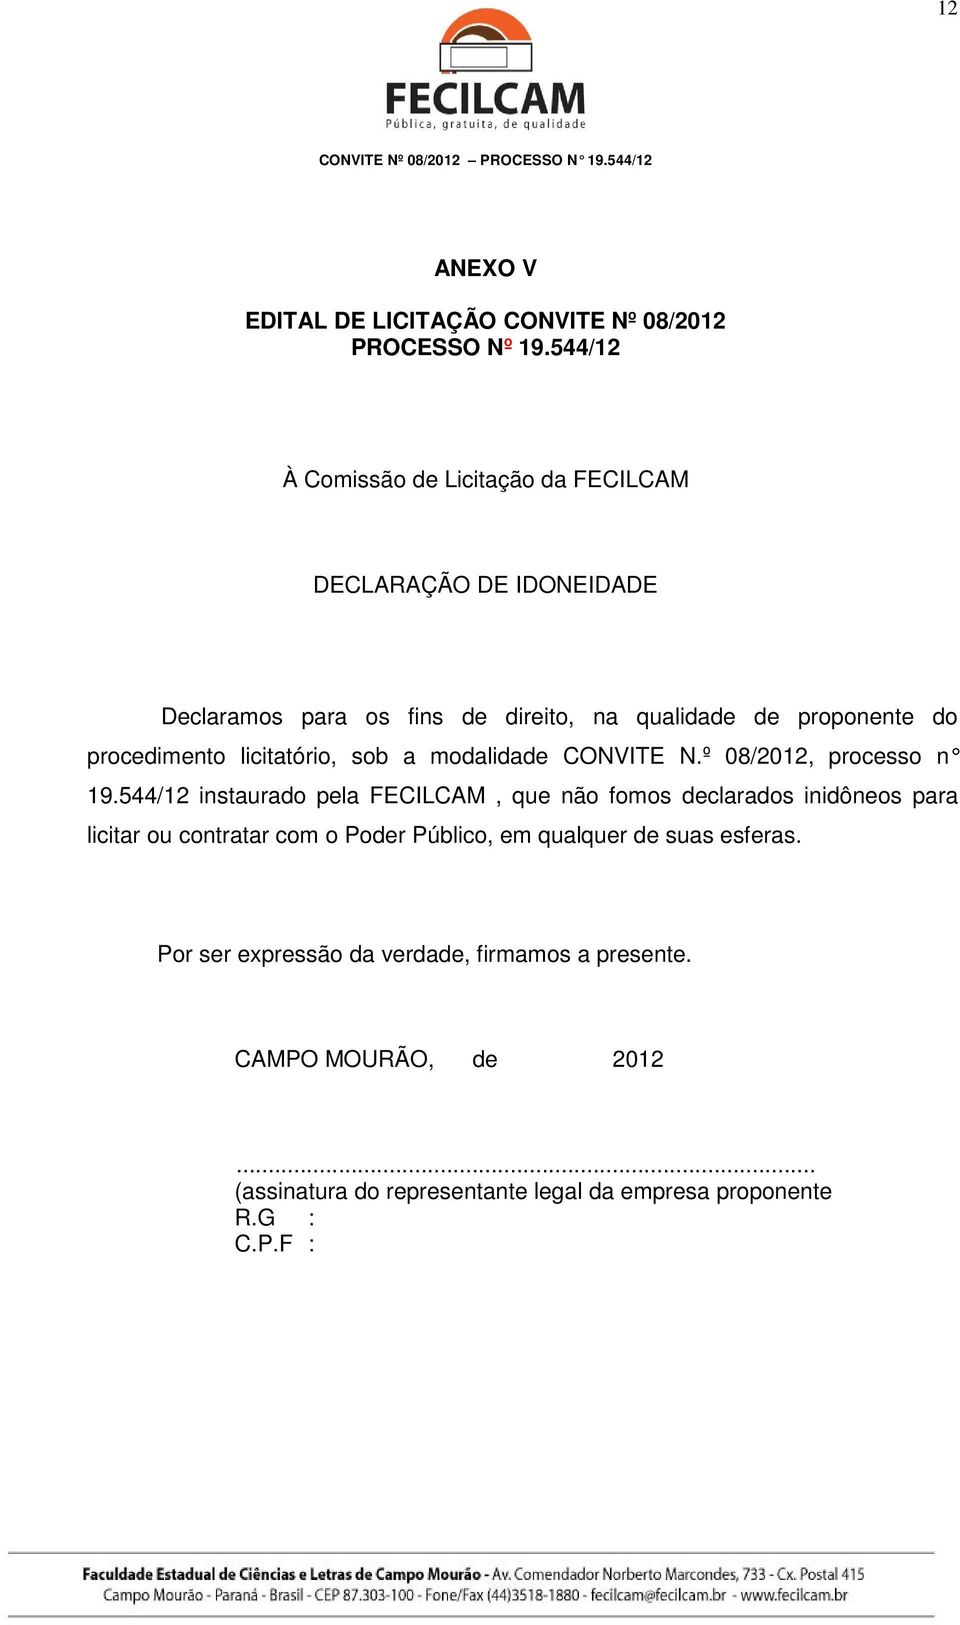 procedimento licitatório, sob a modalidade CONVITE N.º 08/2012, processo n 19.